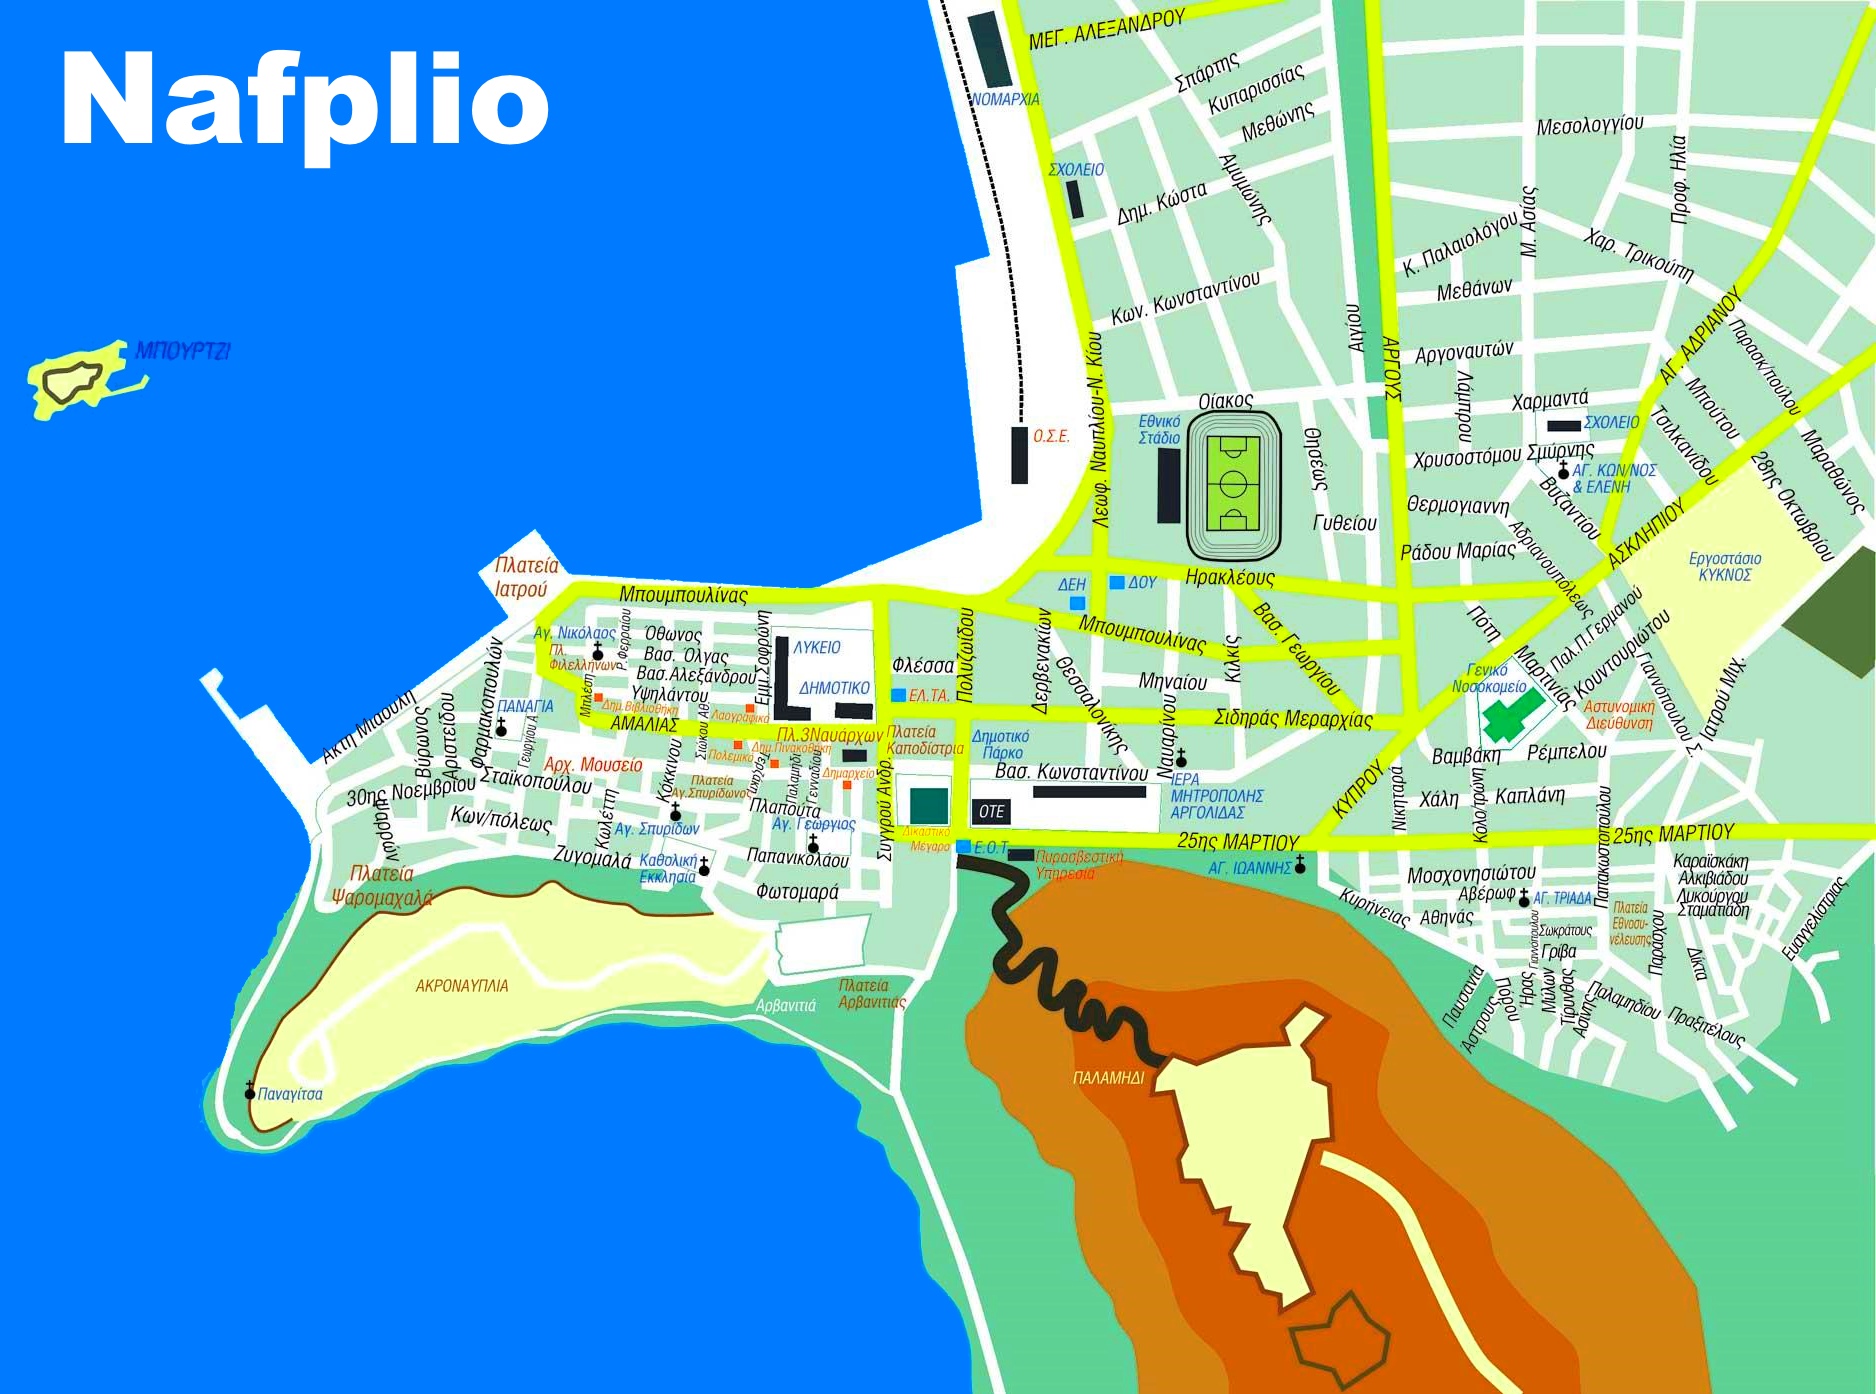 nafplio-tourist-map.jpg